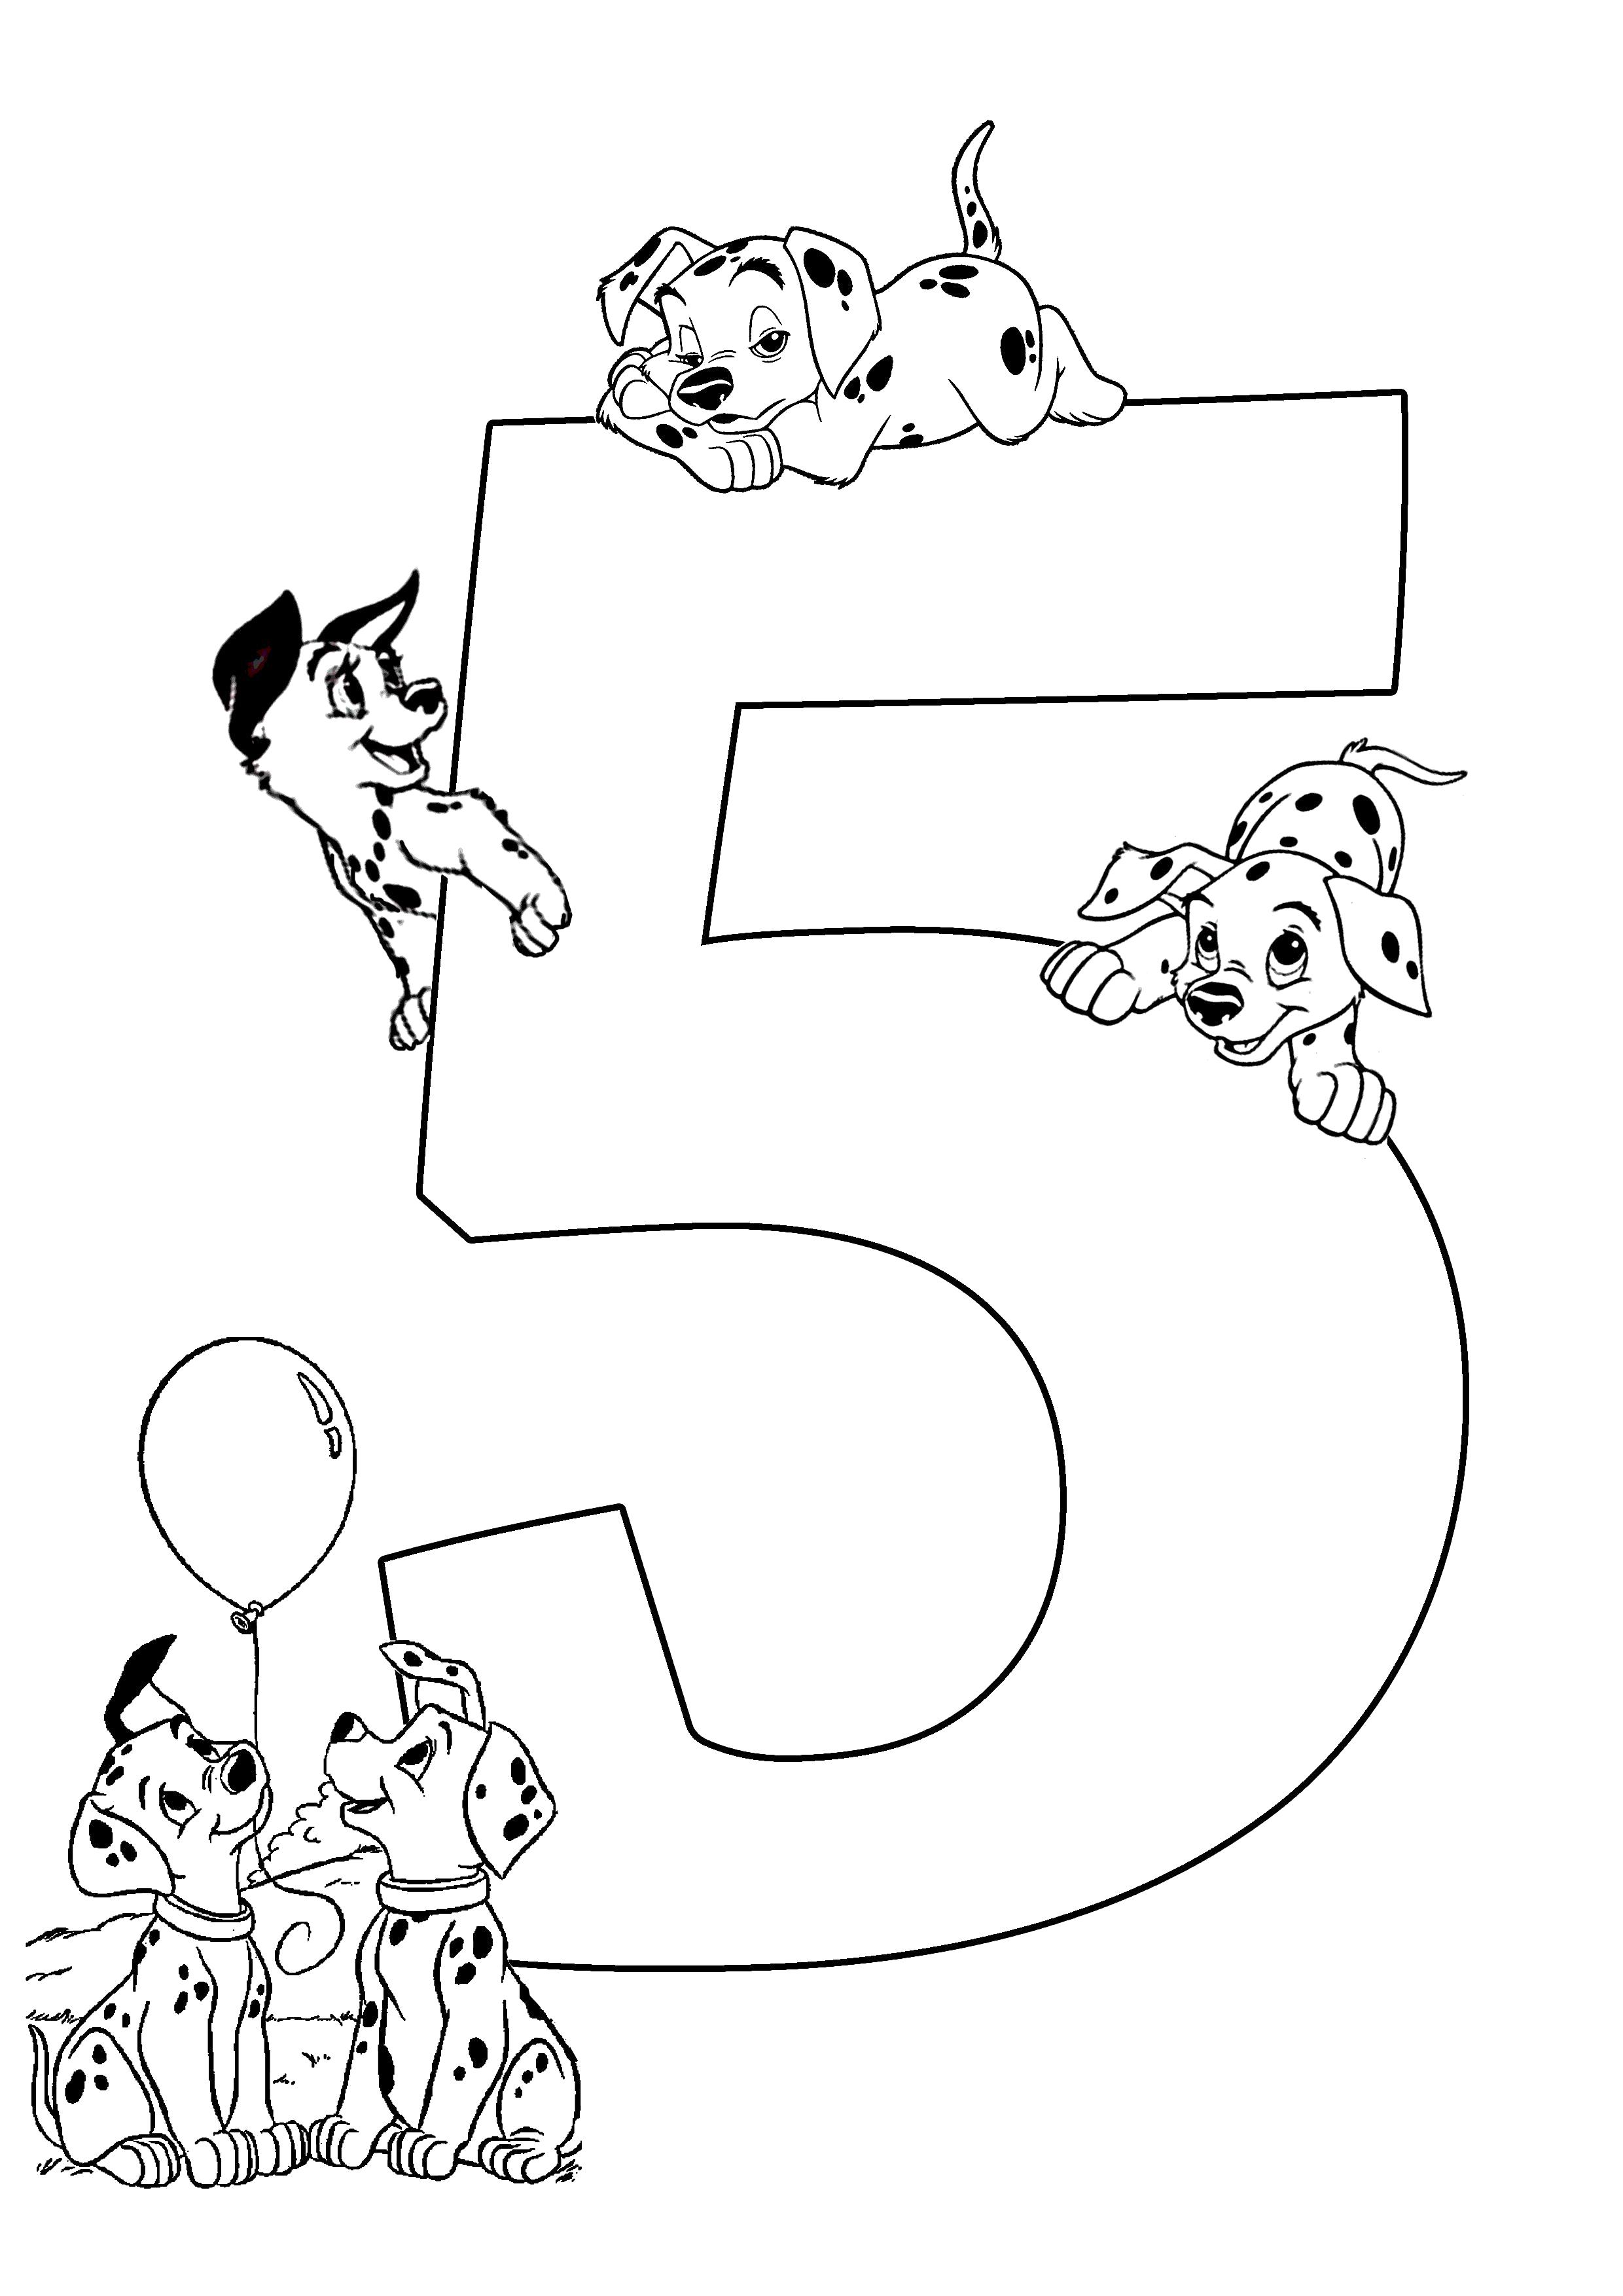 Название: Раскраска Веселый счет пять далматинцев. Категория: с цифрами. Теги: с цифрами.